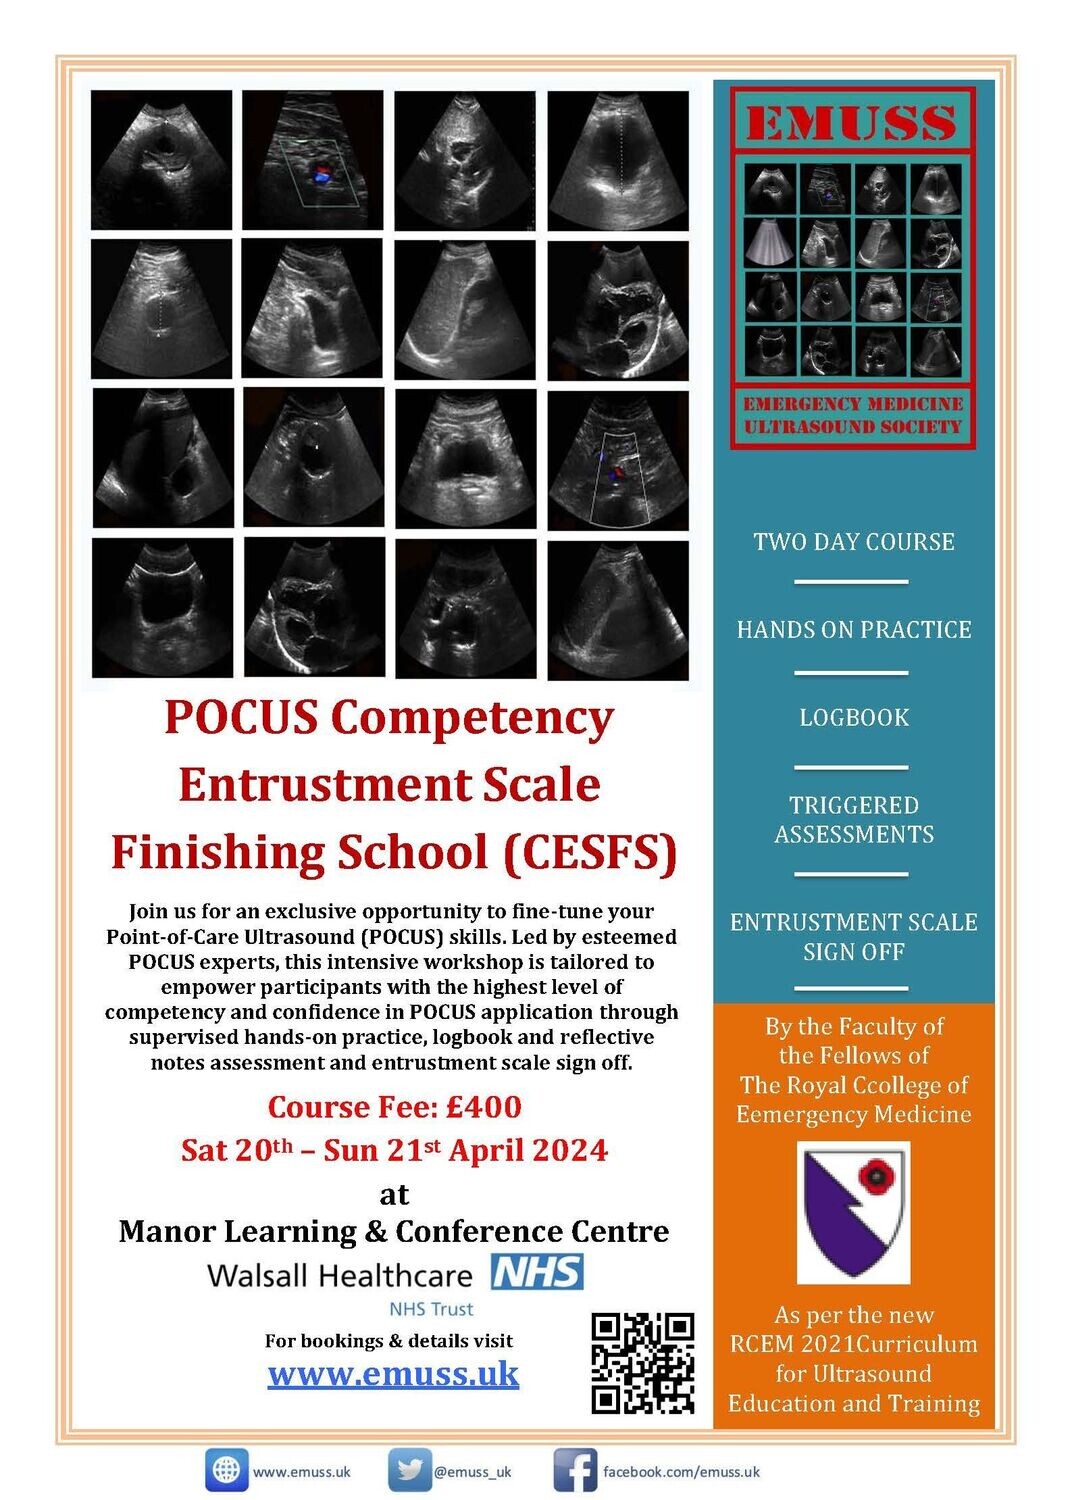 EMUSS POCUS Competency Entrustment Scale Finishing School, 20 -21 April 2024